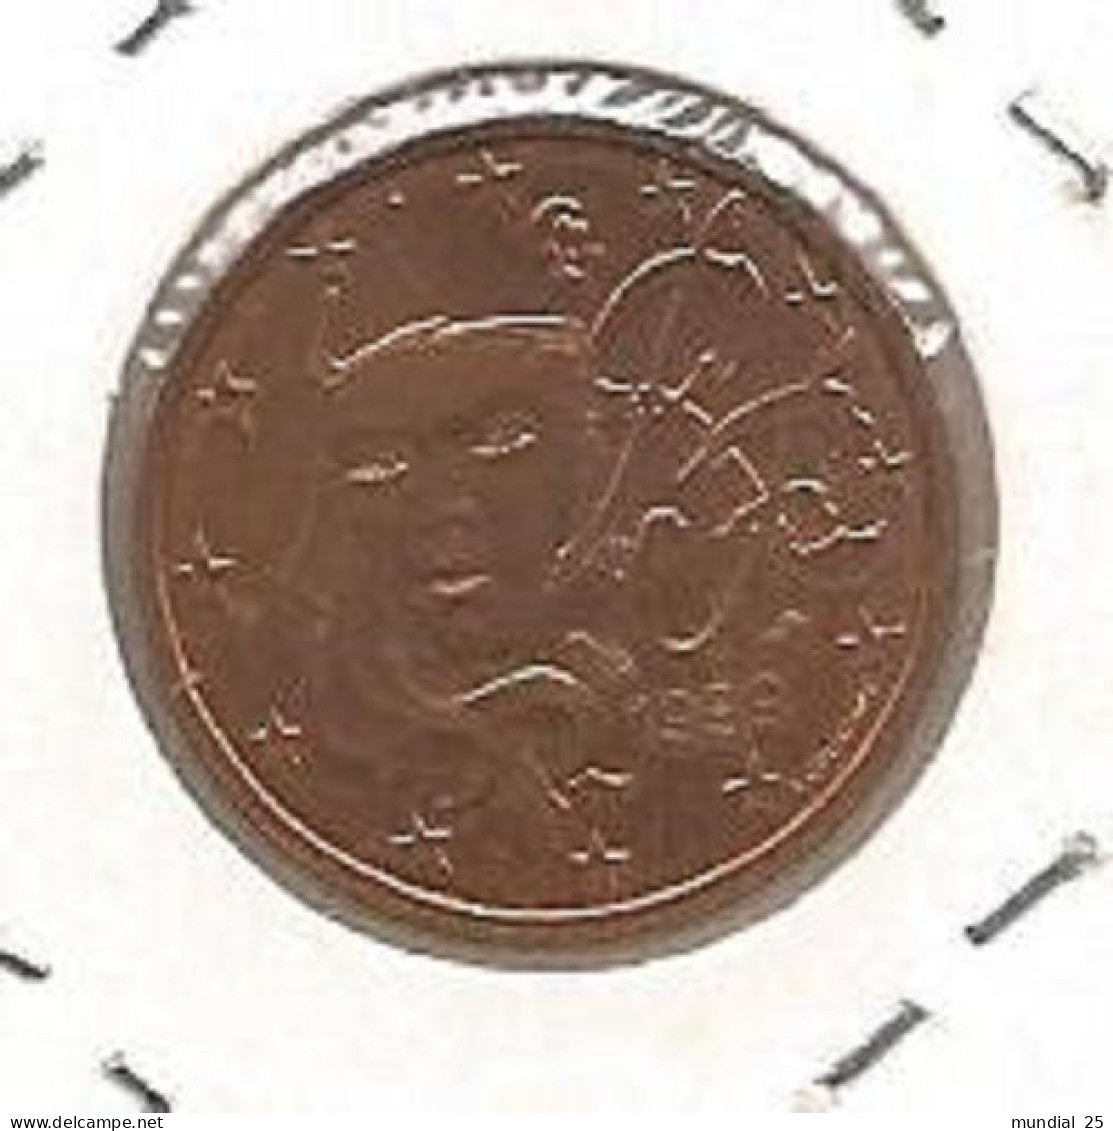 FRANCE 2 EURO CENT 1999 - France